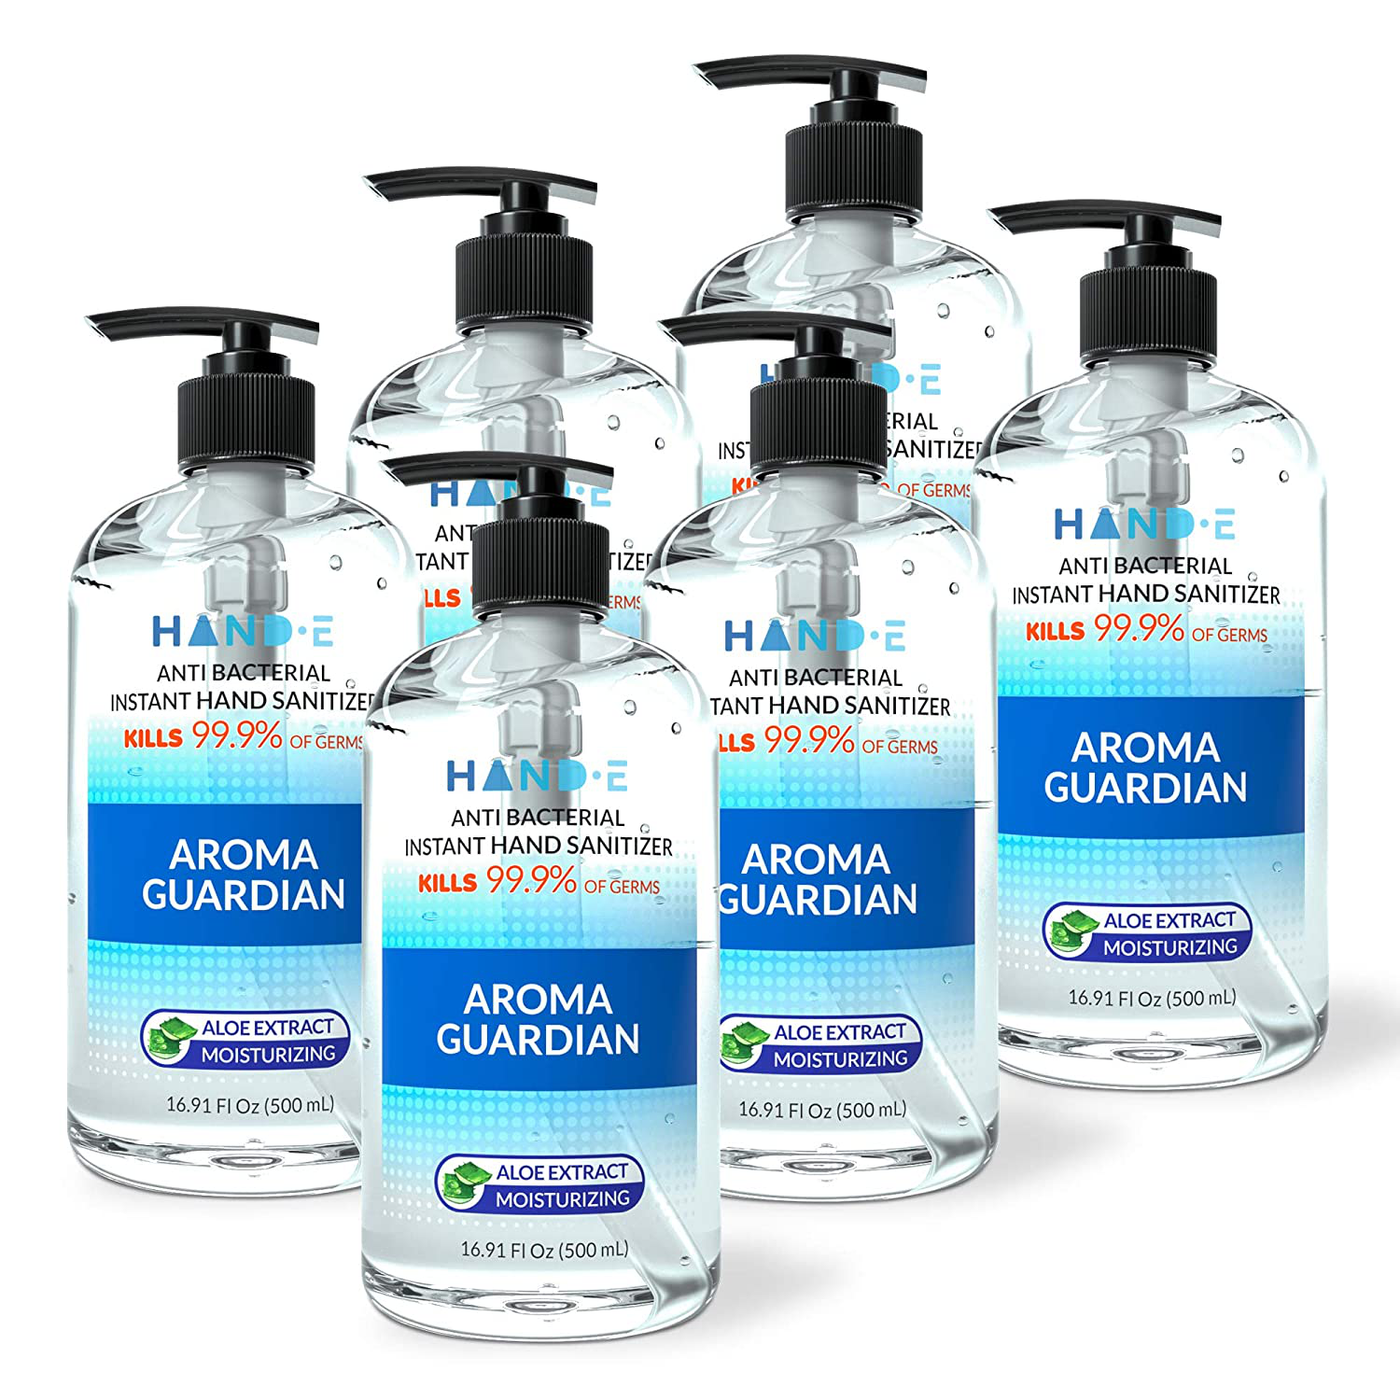 Hand-E Hand Sanitizer Gel Pump - 6 Pack, 16 oz Large Pump Bottle - 75% Ethyl Alcohol Based Instant Sanitizing Gel With Moisturizing Aloe - Kills 99.9% of Germs - Rinse Free